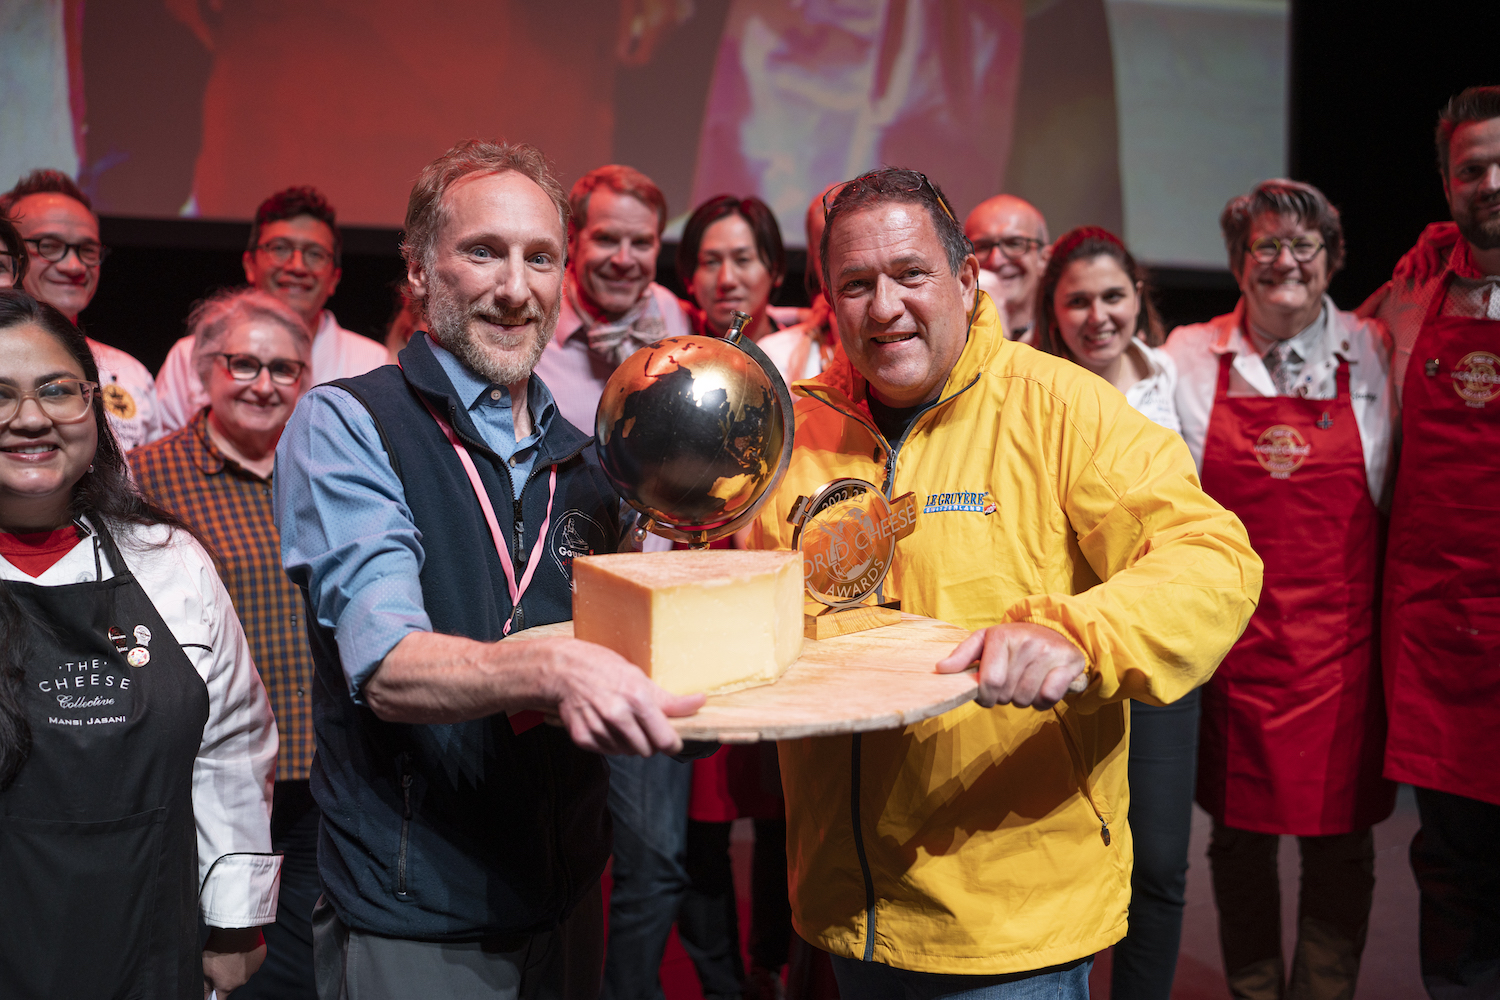 Joe Salonia and Dennis Kaser holding the winning cheese at world cheese awards 2022